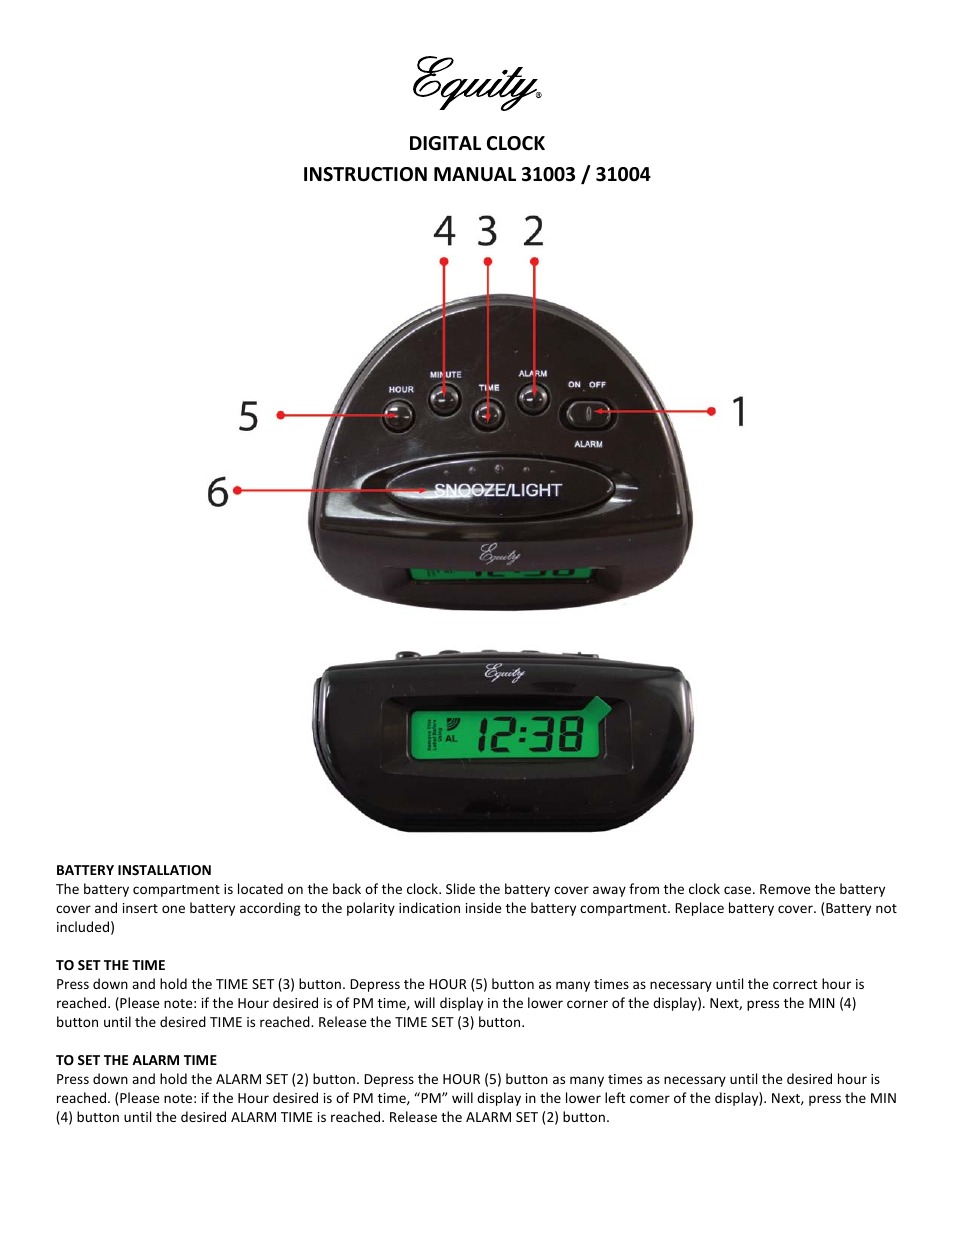 31003 Digital Alarm Clock